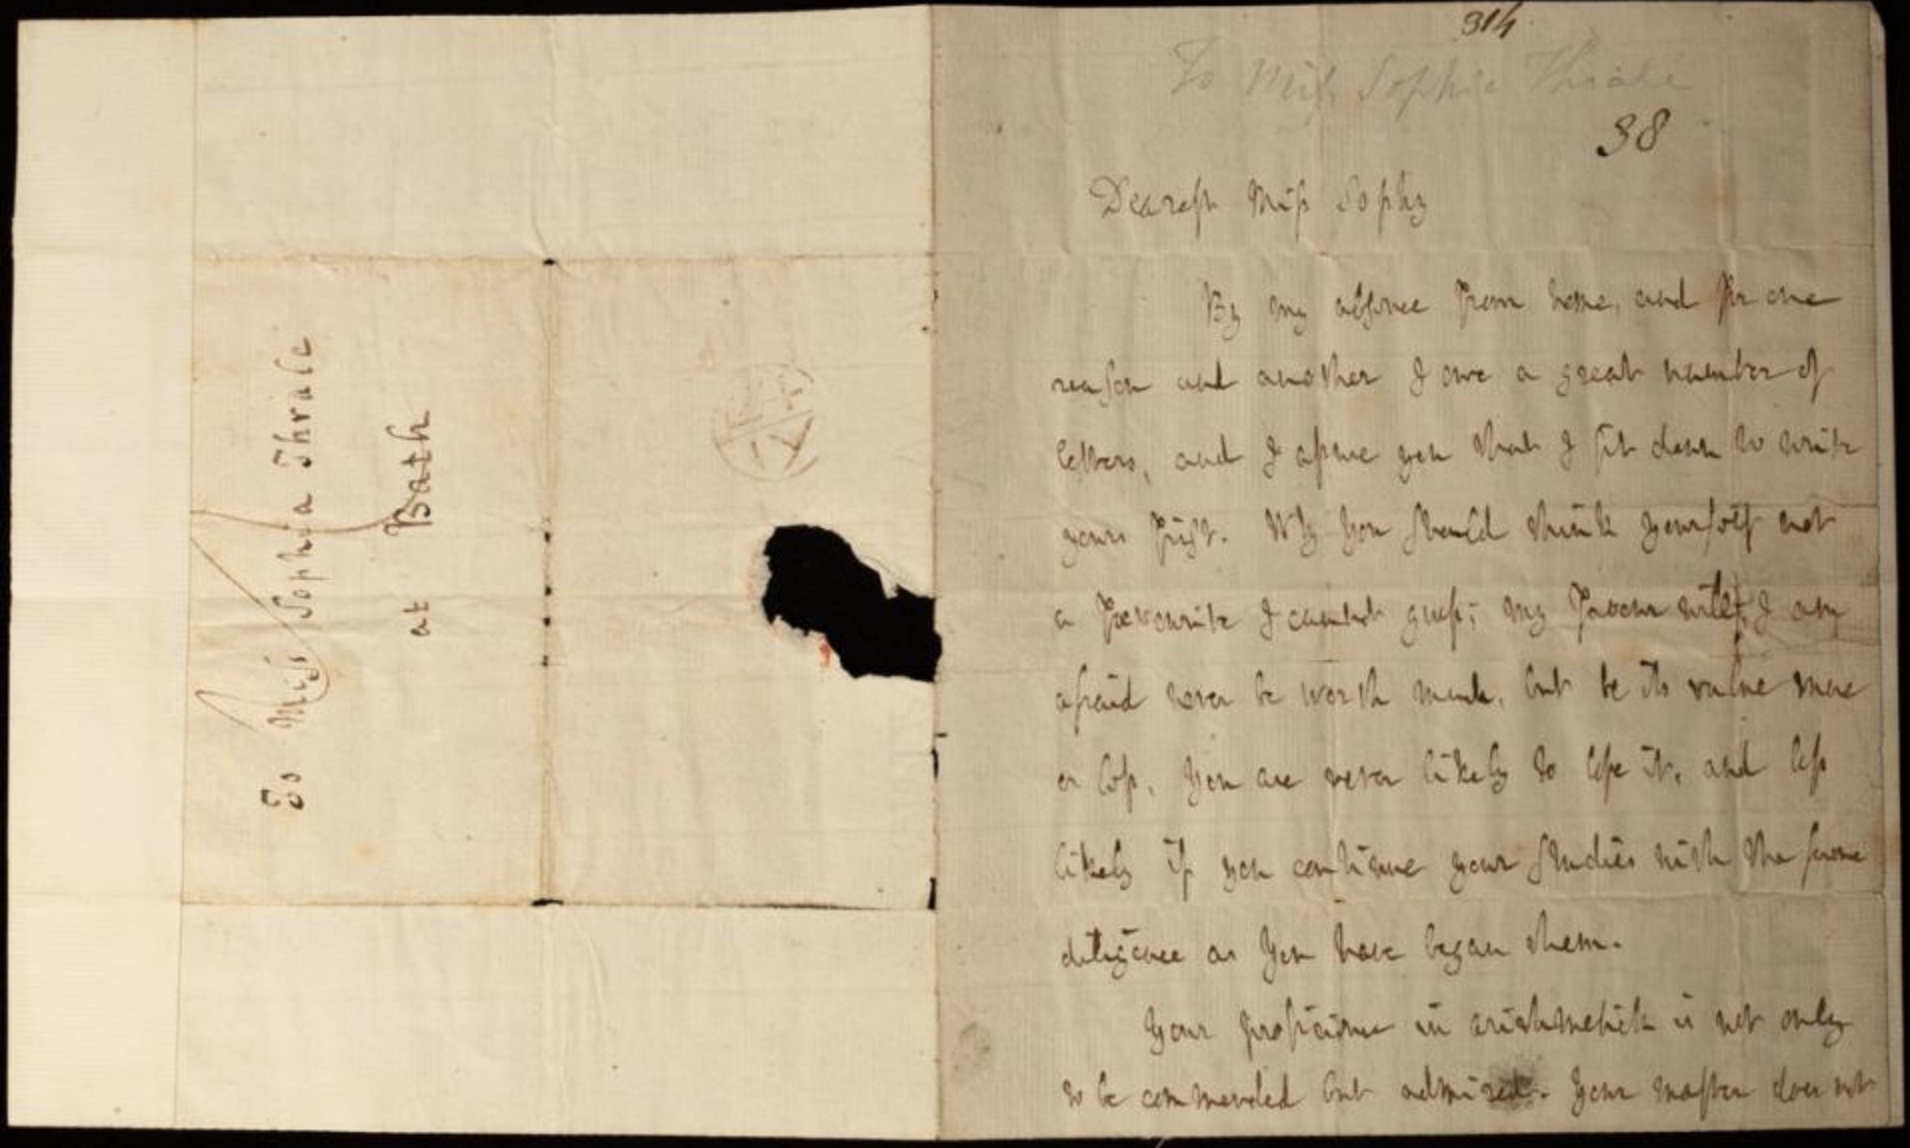 A letter written by Samuel Johnson